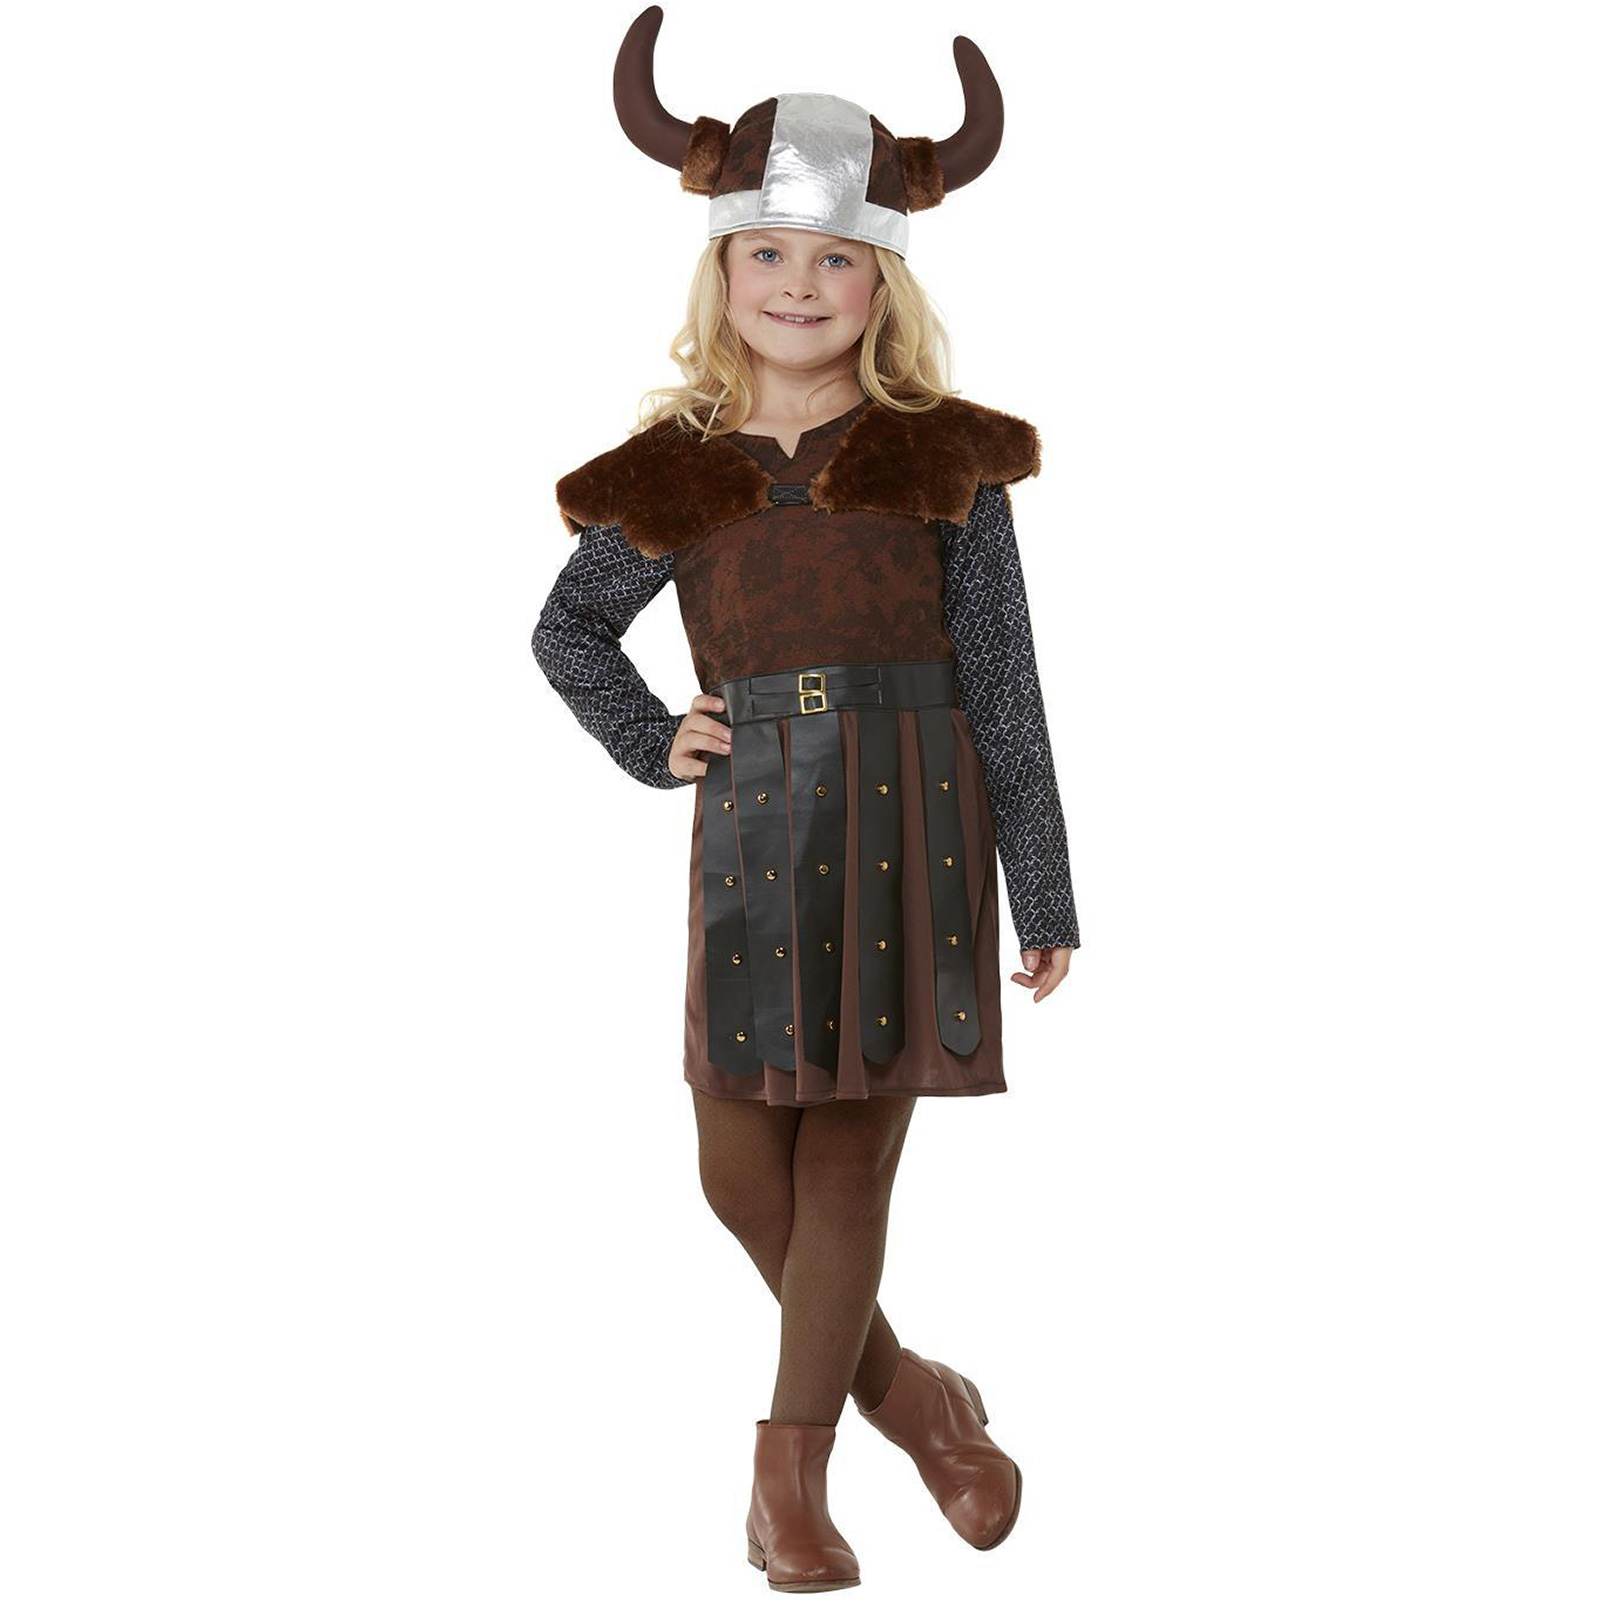 Merveilleux Costume Guerrier-Âge 7-8 Ans-Robe FANTAISIE Fille book kids Viking 